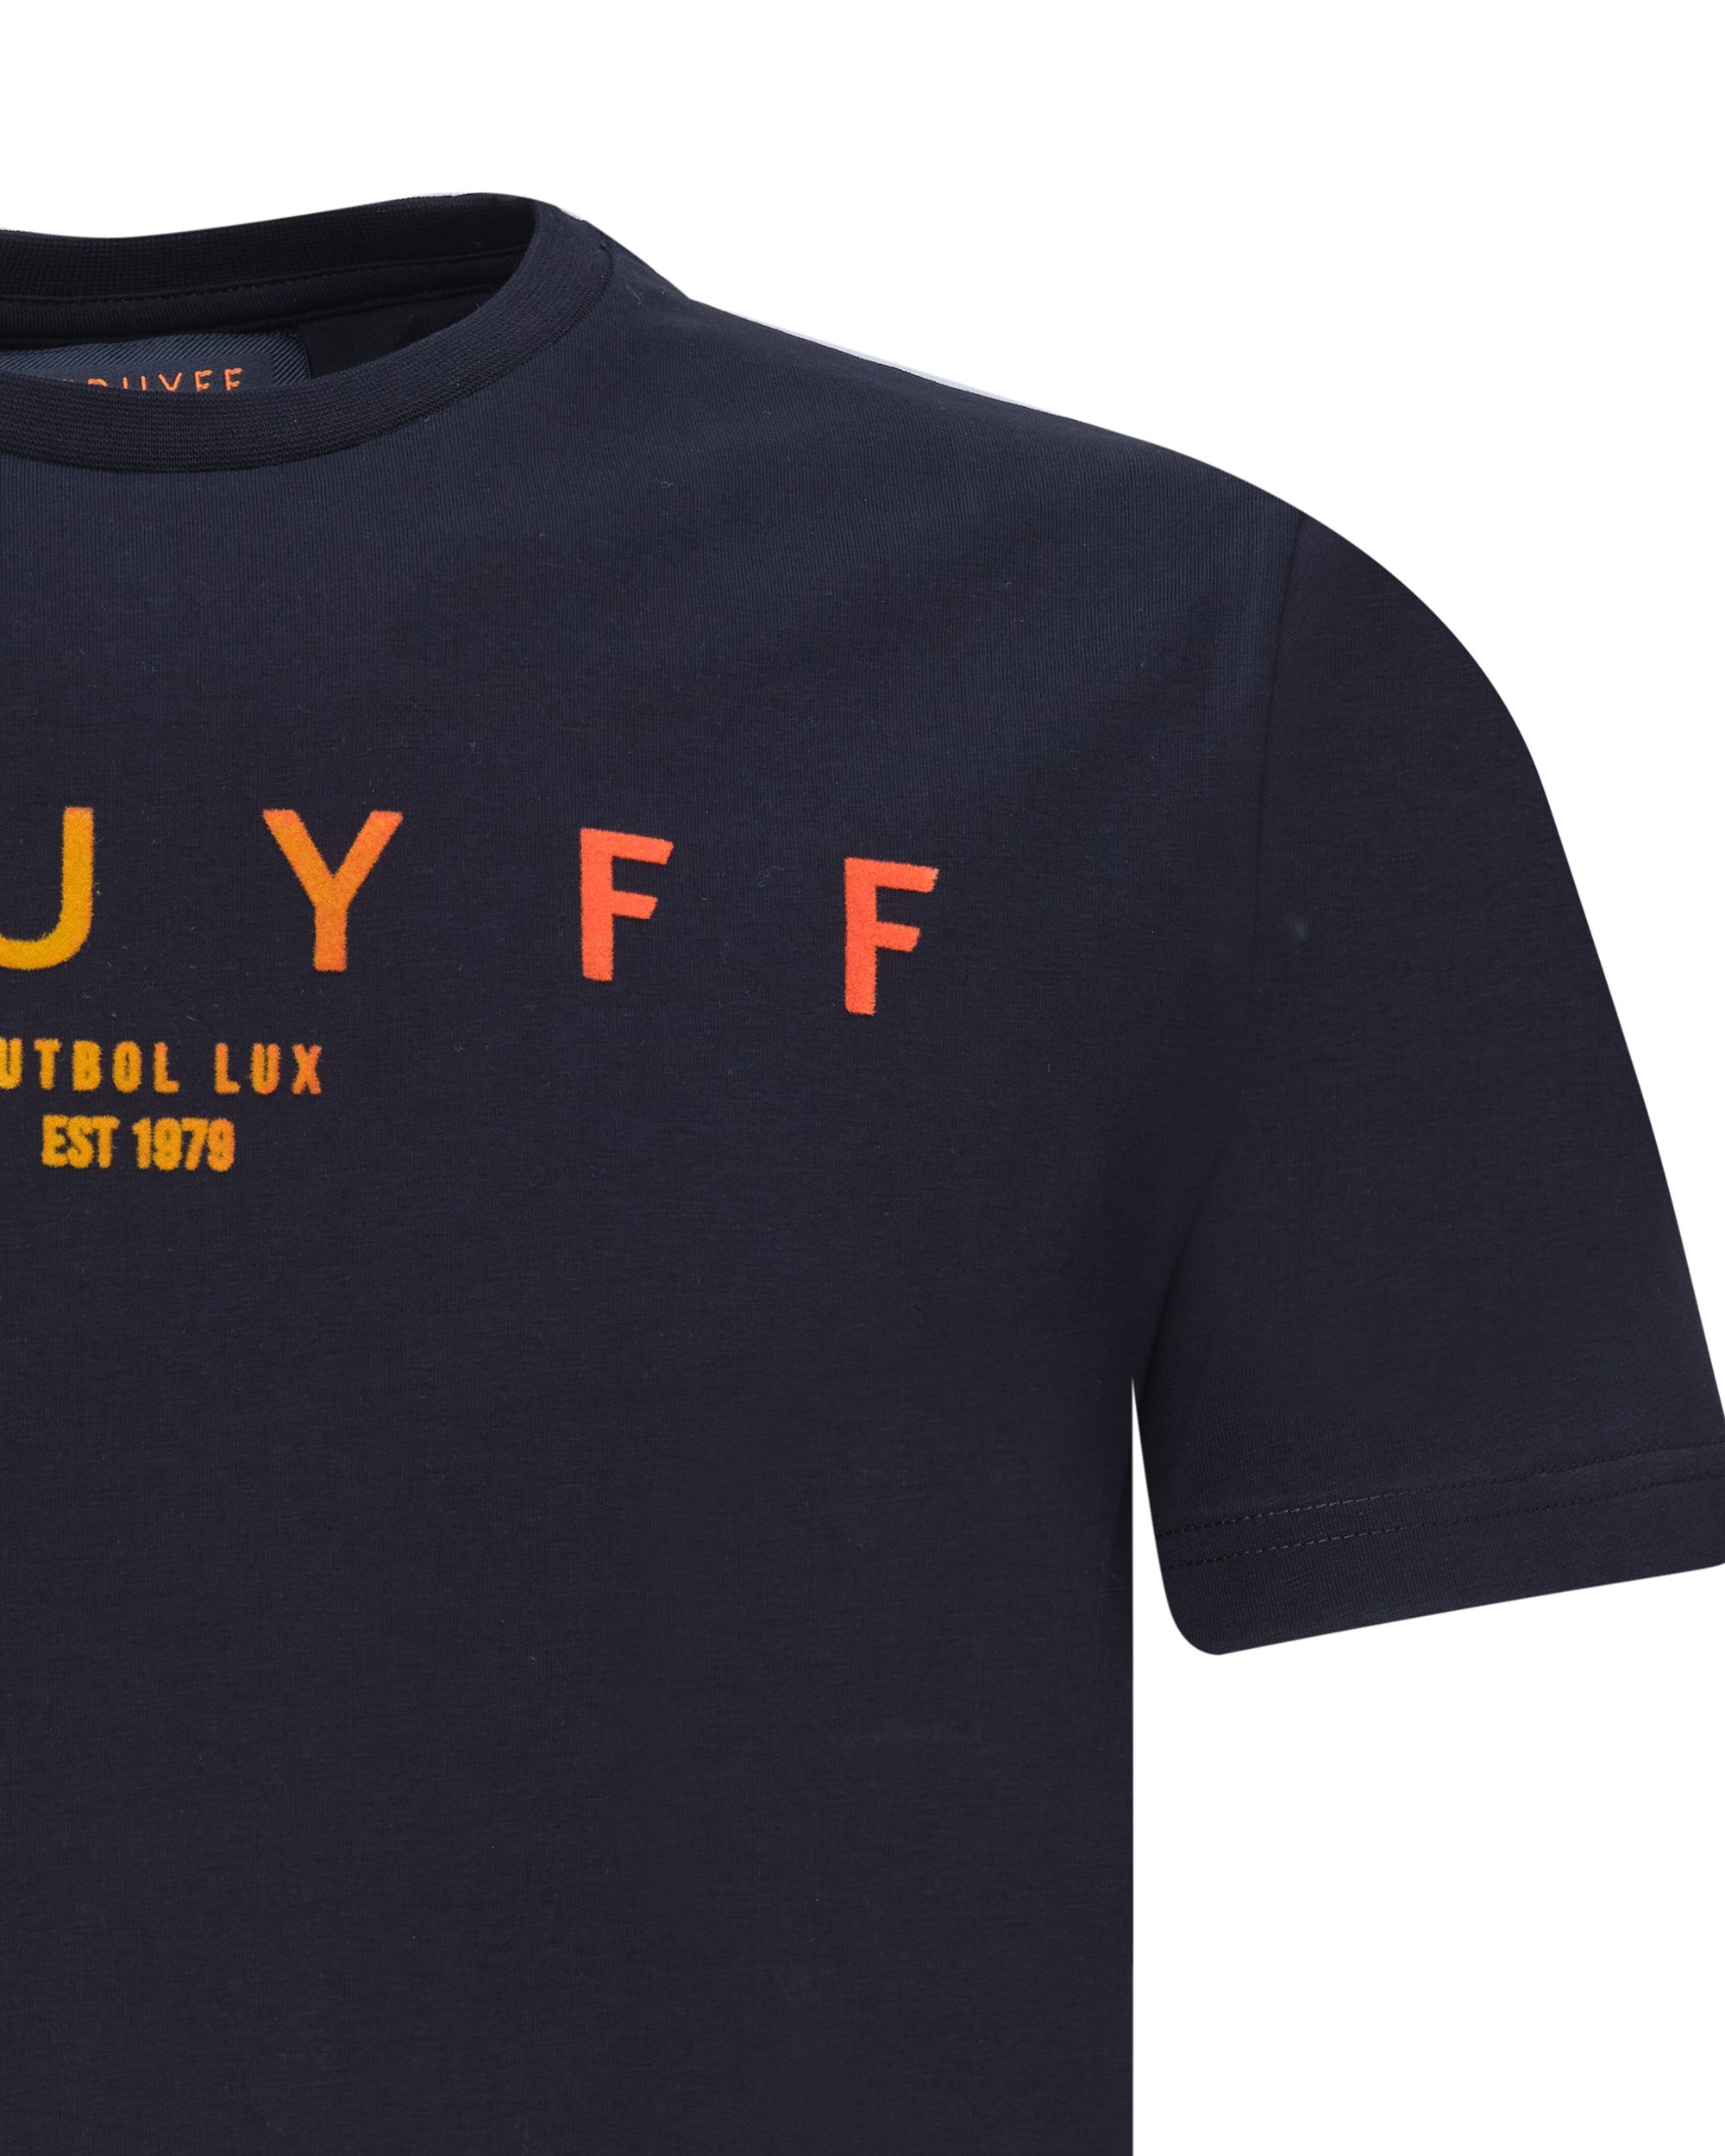 Cruyff Eder T-shirt KM Zwart 078797-001-L